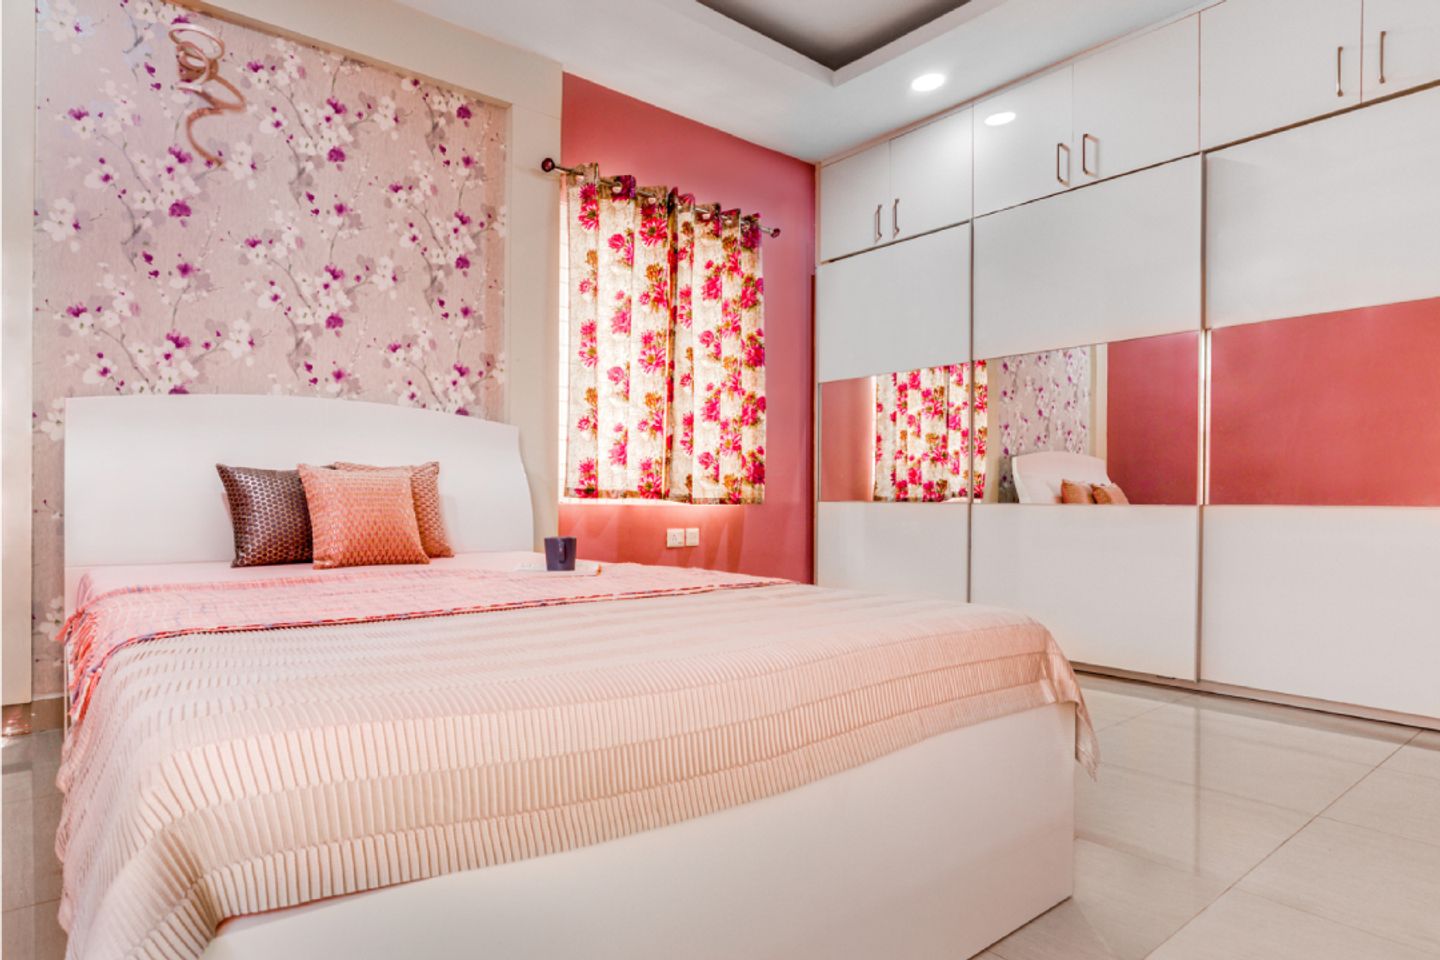 12x11 Ft Pink Girls Room Design With Floral Wallpaper - Livspace